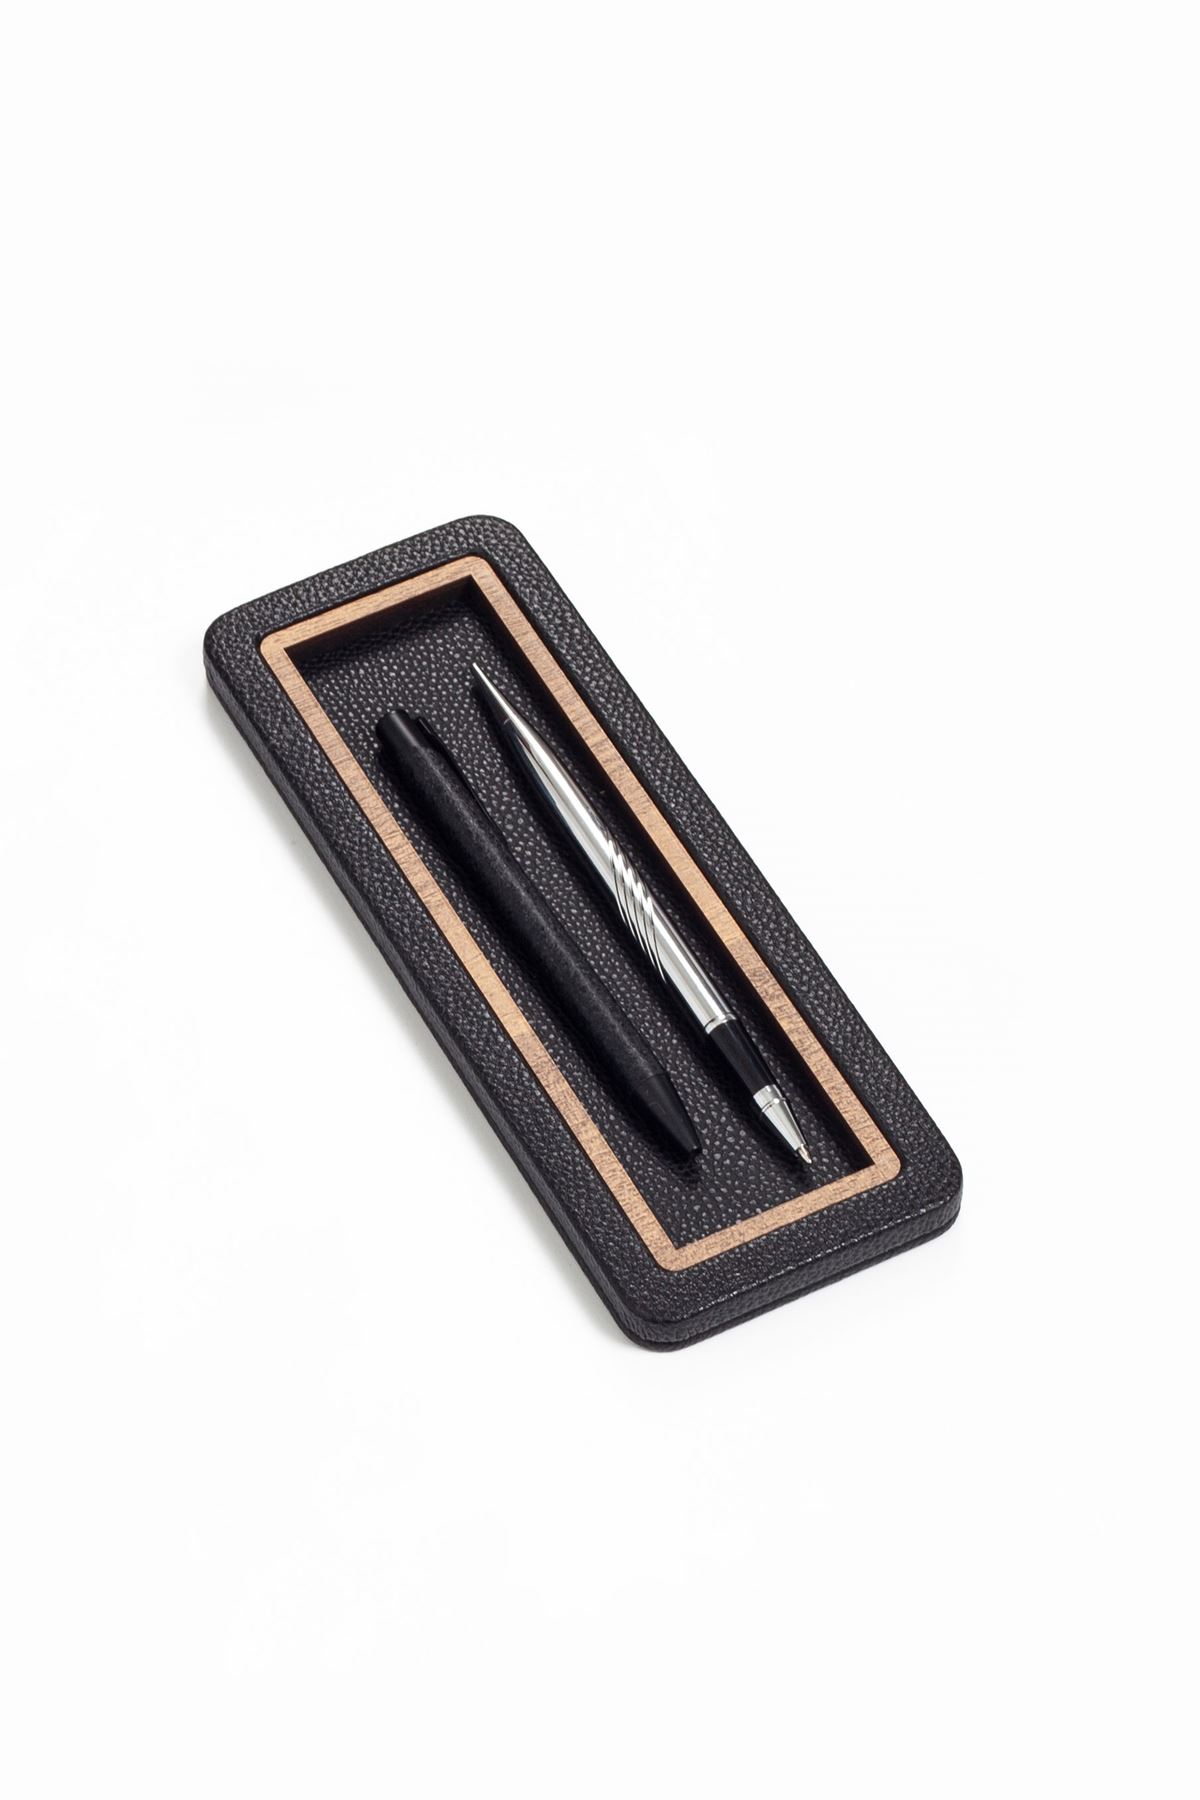 Desktop Leather Wood Detailed Horizontal Pen Holder